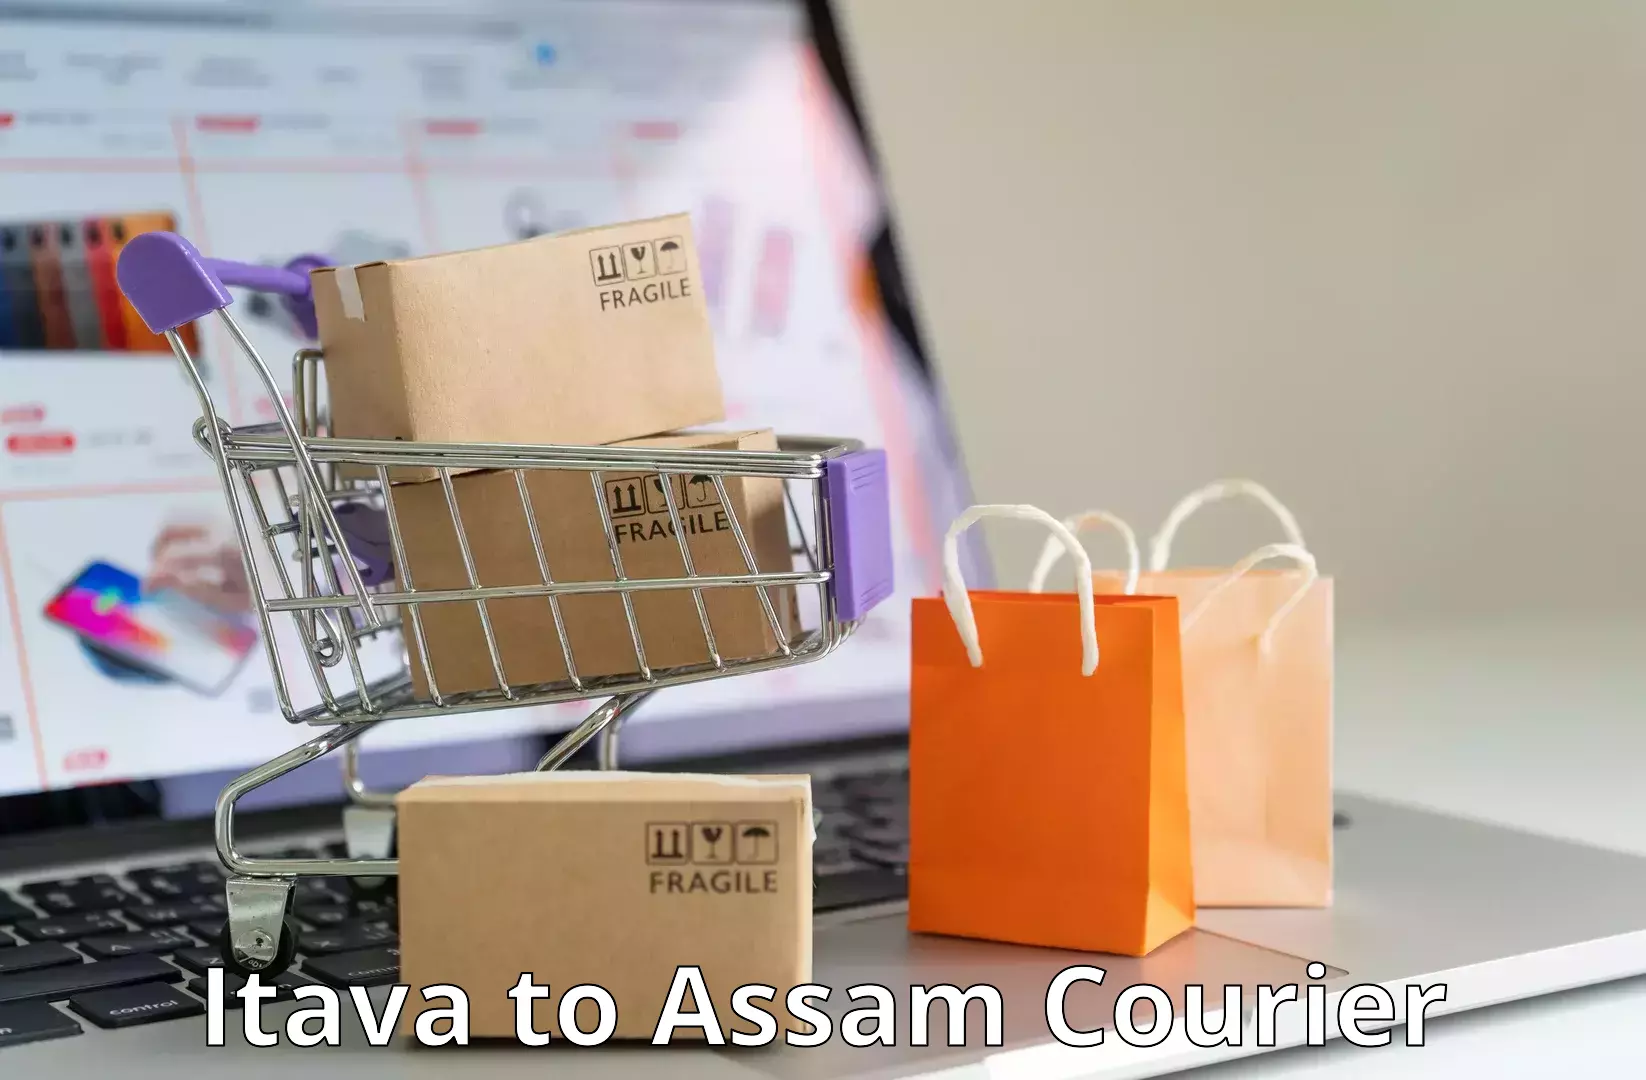 Efficient cargo handling Itava to Assam